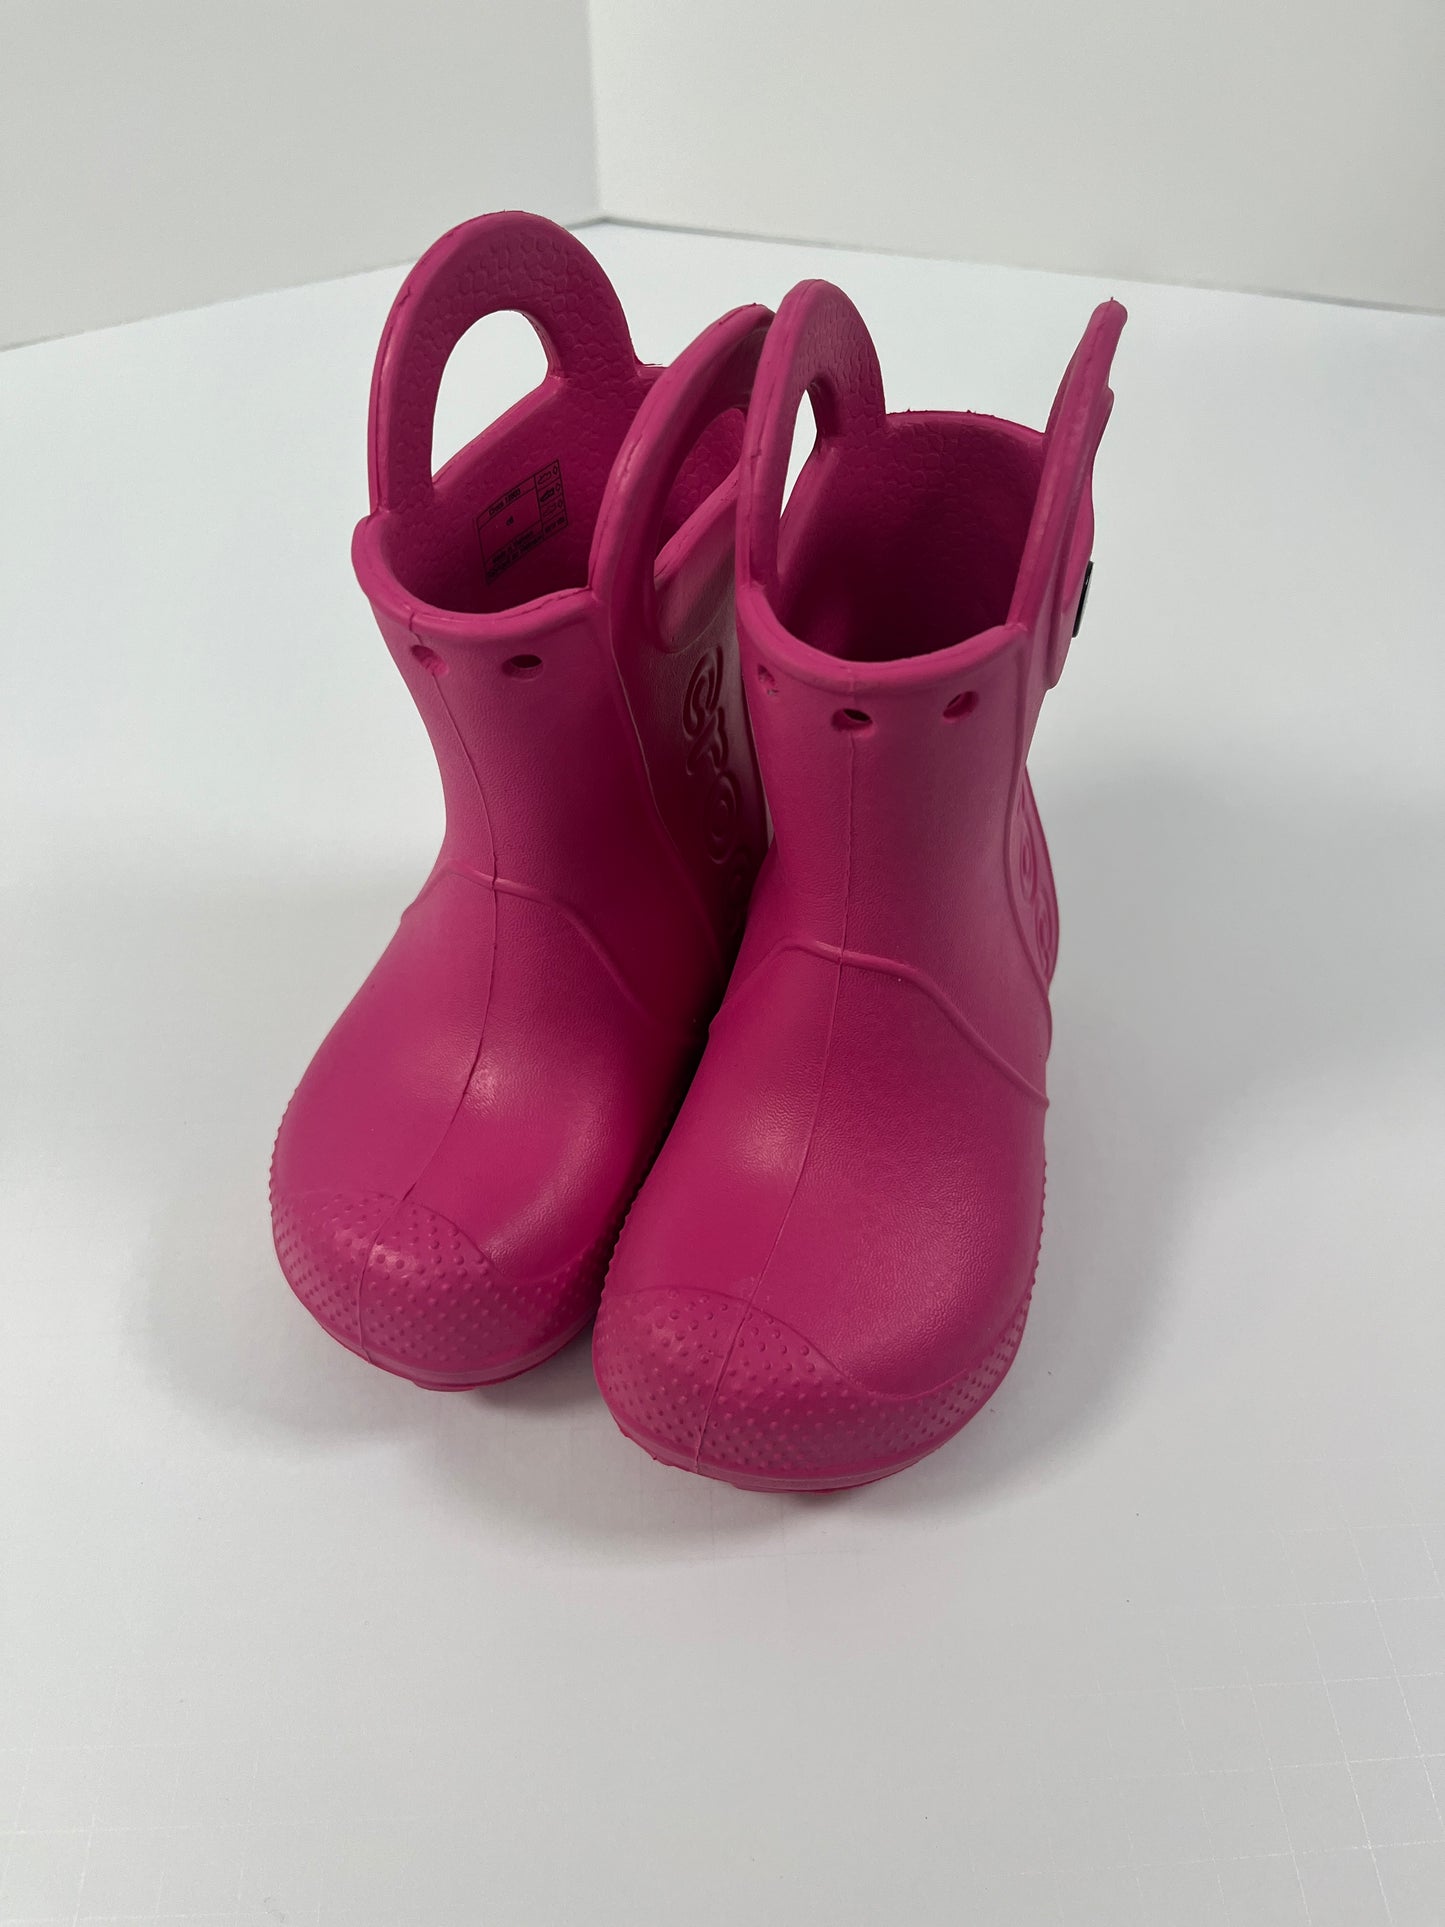 PPU 45242 girls Crocs size C6 pink rainboots NWOT